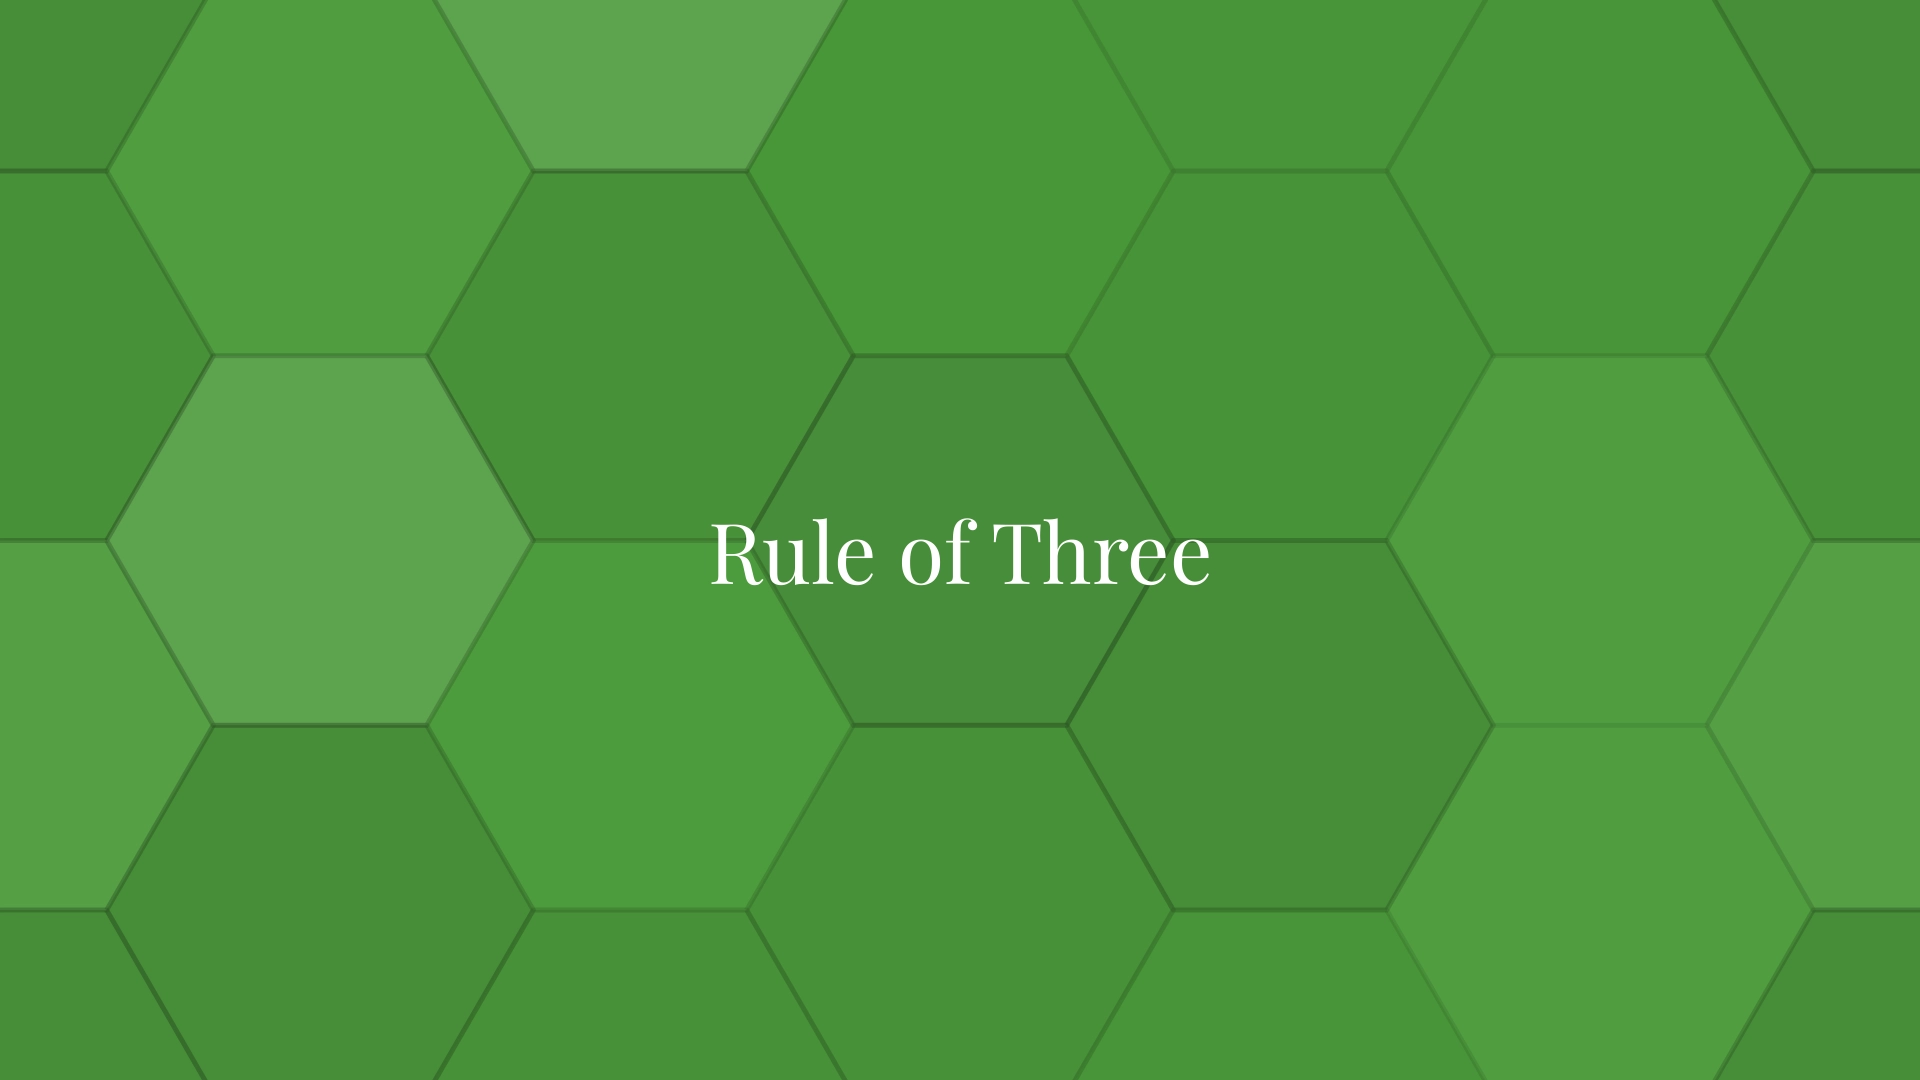 Regla de tres